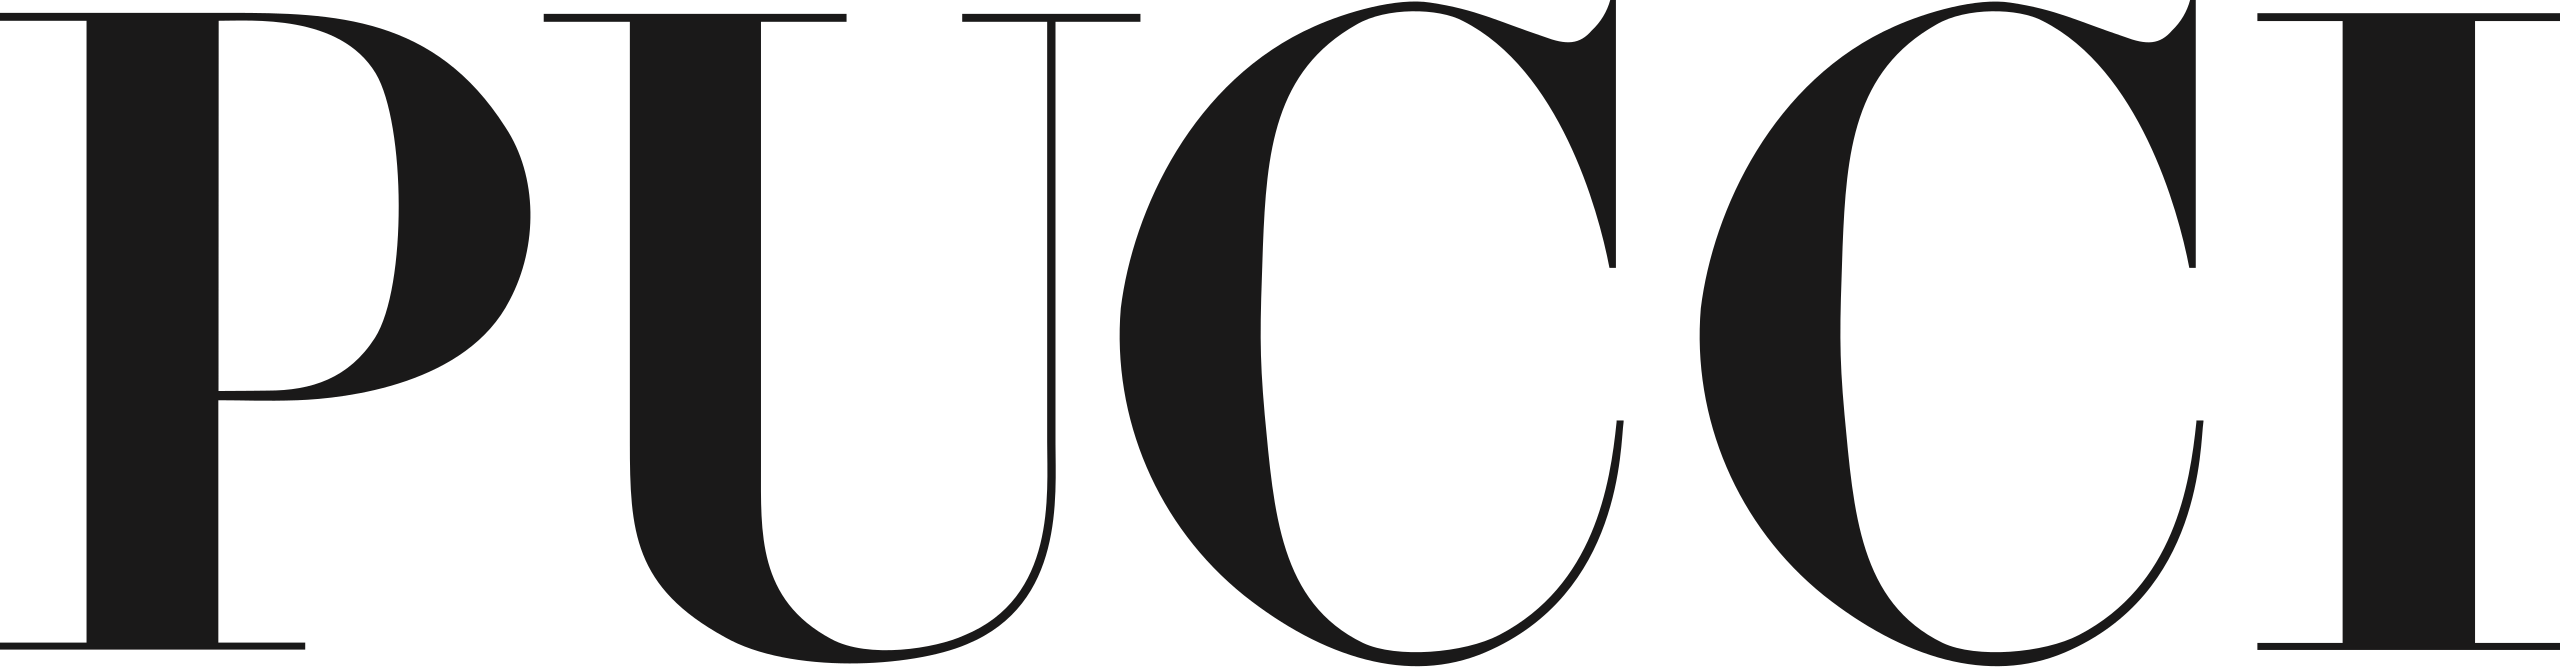 File:Pucci logo.svg - Wikipedia